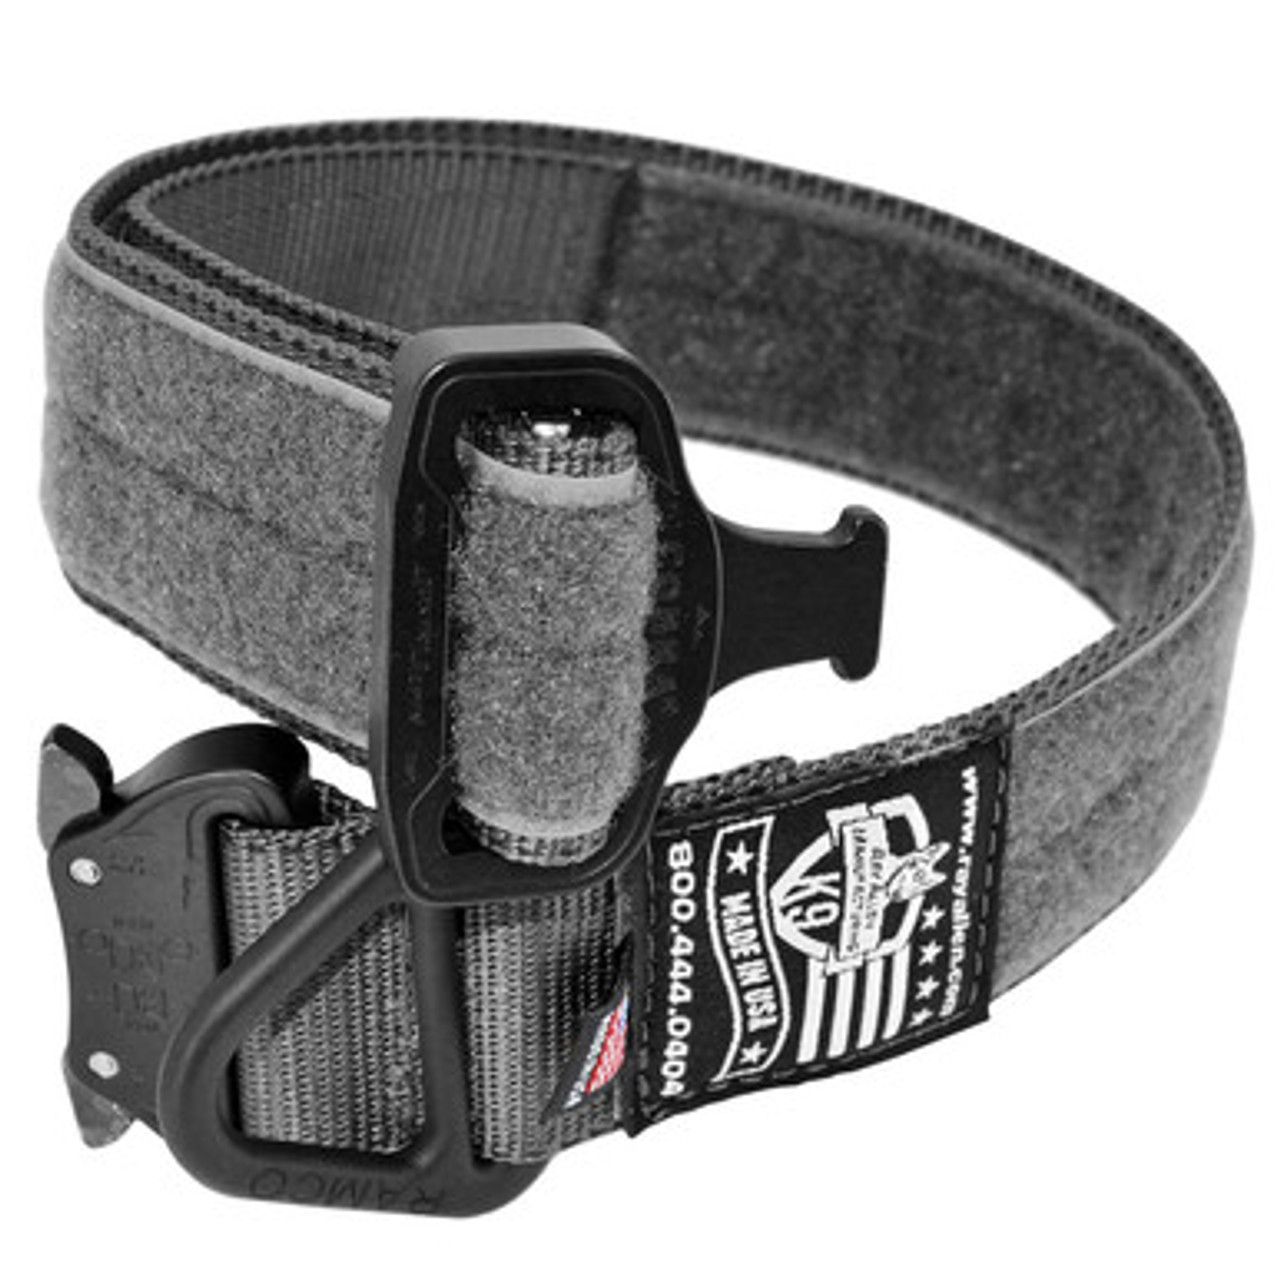 Cobra Buckle Dog Collar, Heavy-Duty Handle